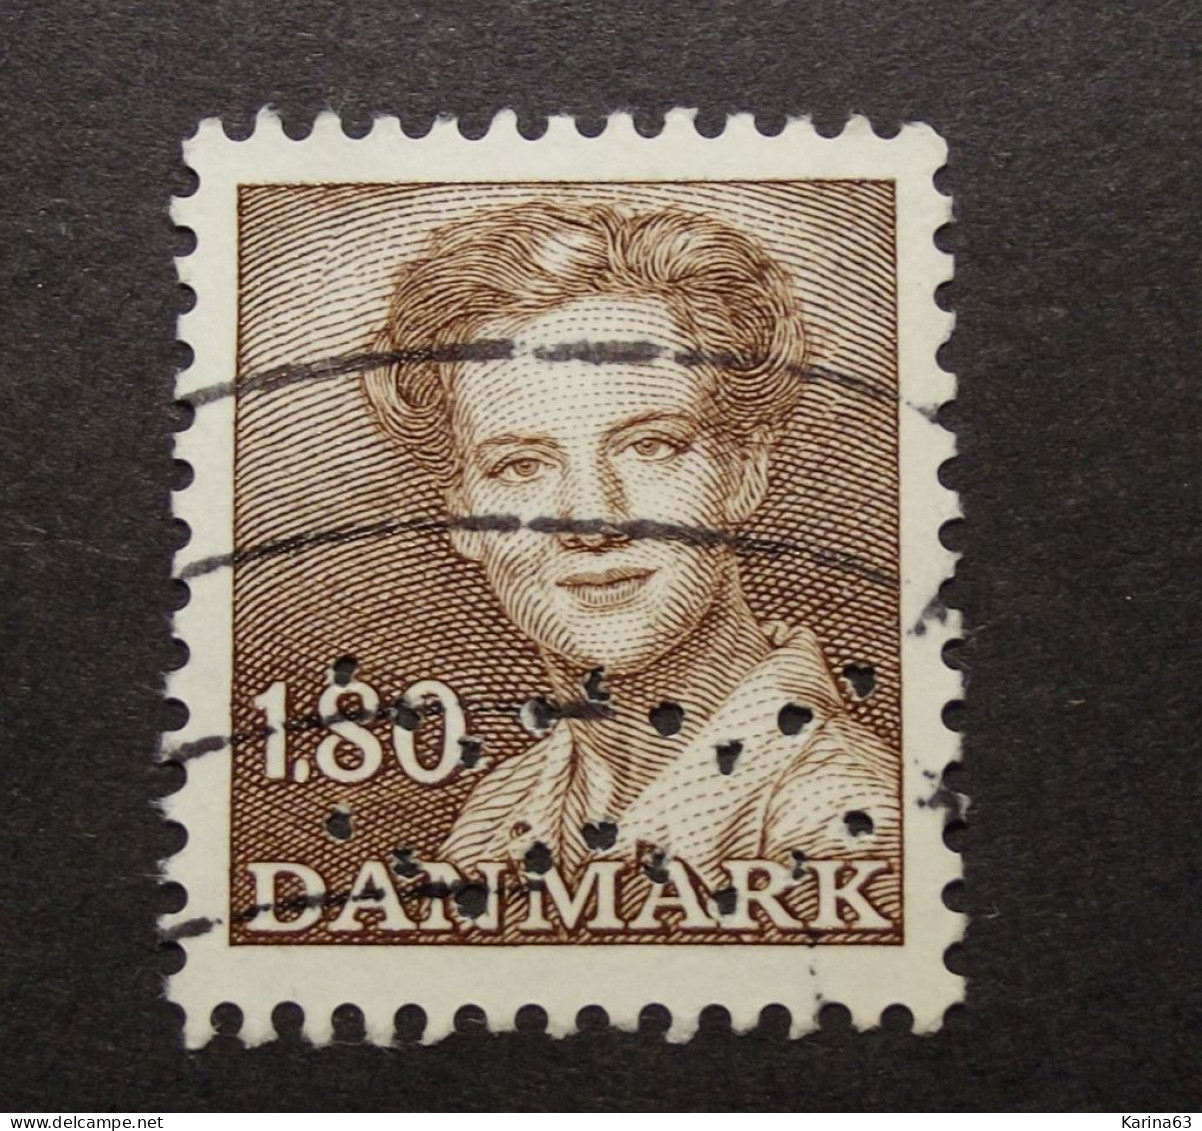 Denmark  - Danemark - 1975 - ( Queen Margrethe ) Perfin - Lochung -  Waves - Kobenhavns Kommune - Cancelled - Usado